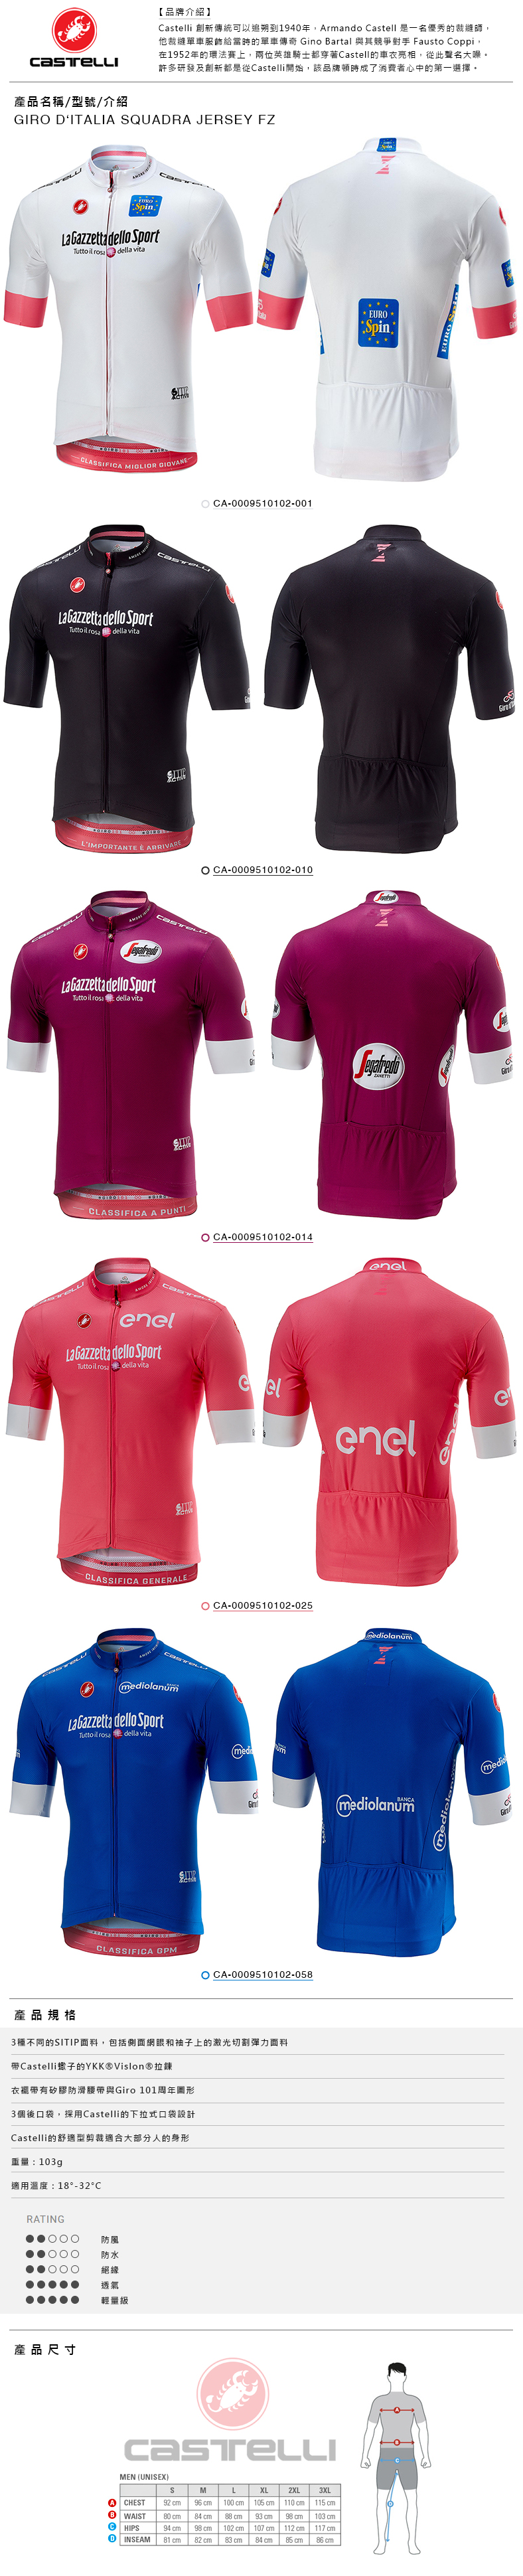 castelli giro squadra fz short sleeve cycling jersey